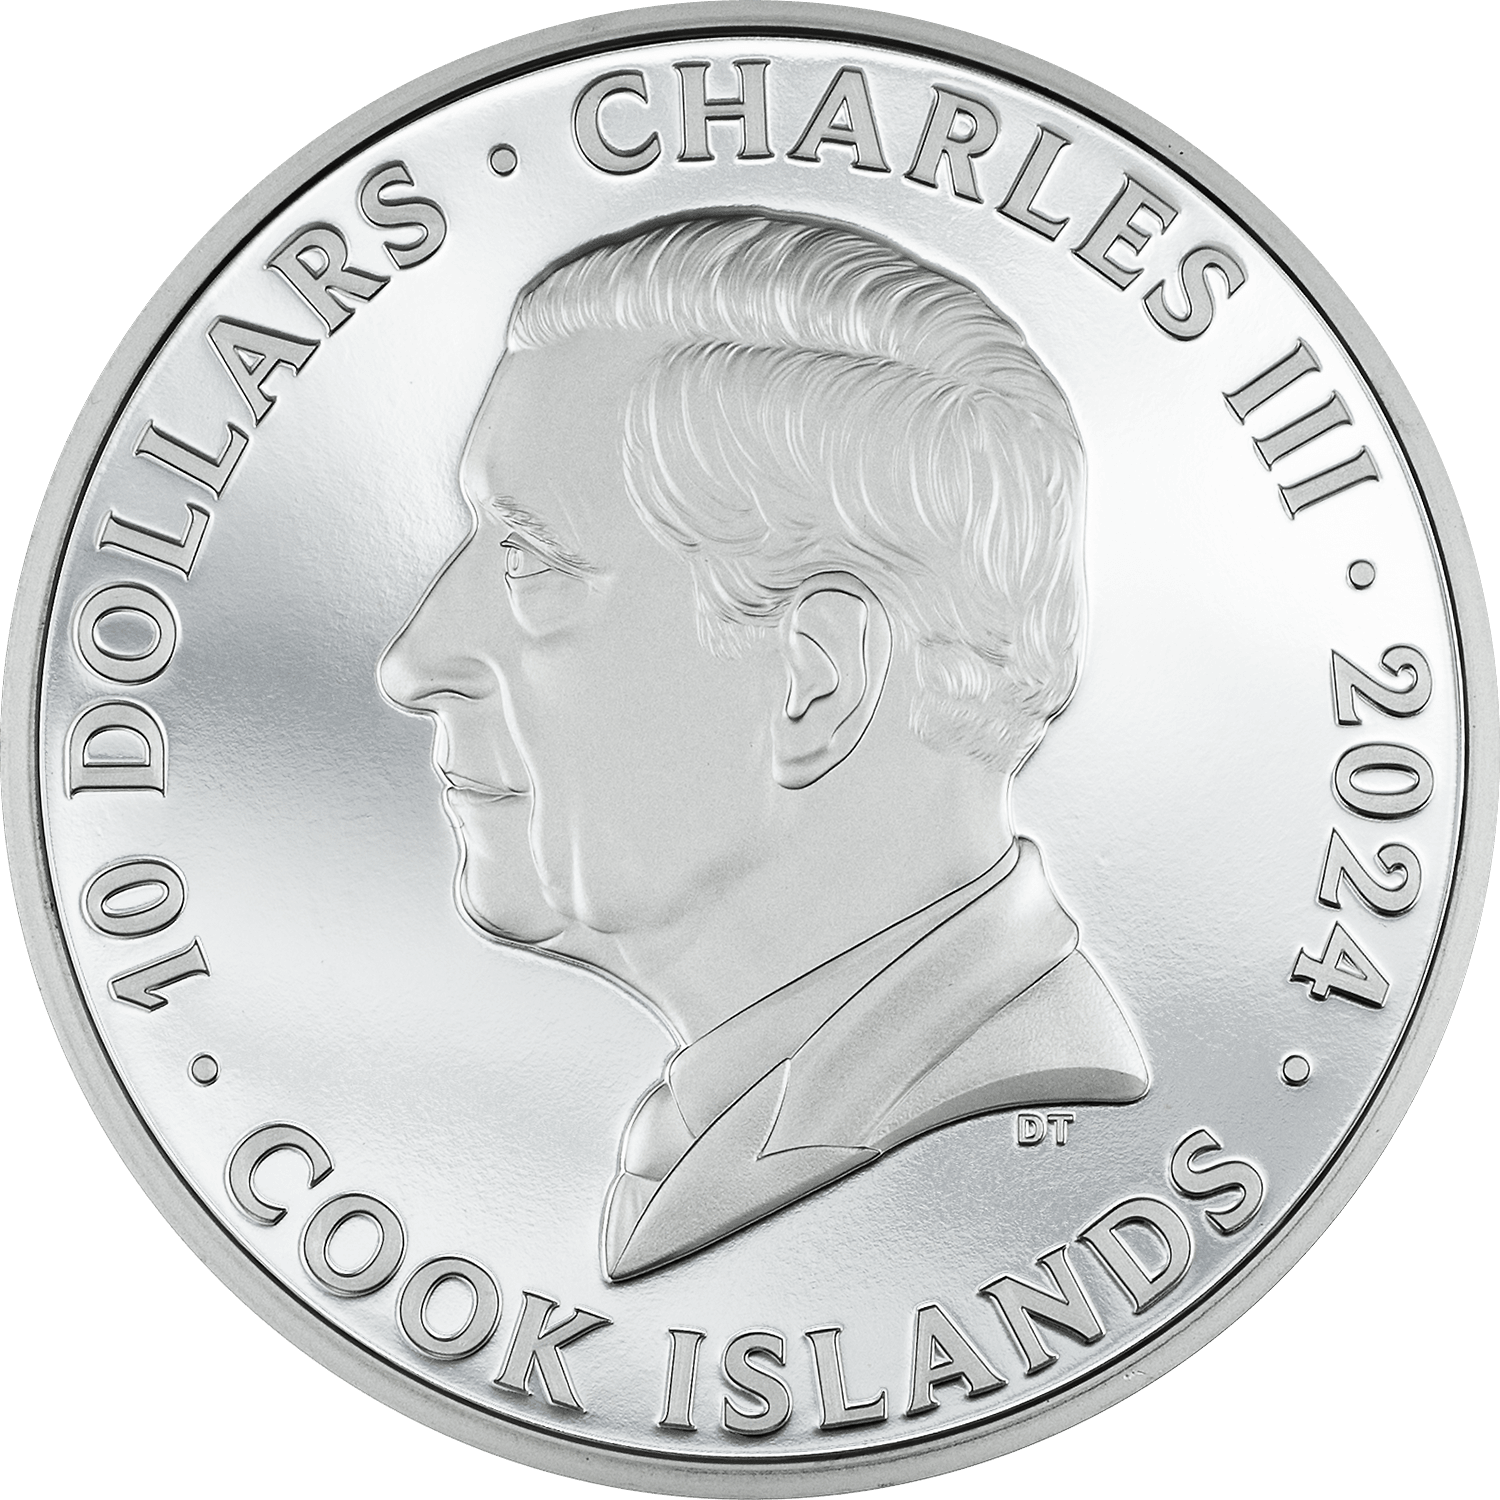 K2 Peaks 2 Oz Silver Coin $10 Cook Islands 2024 - PARTHAVA COIN